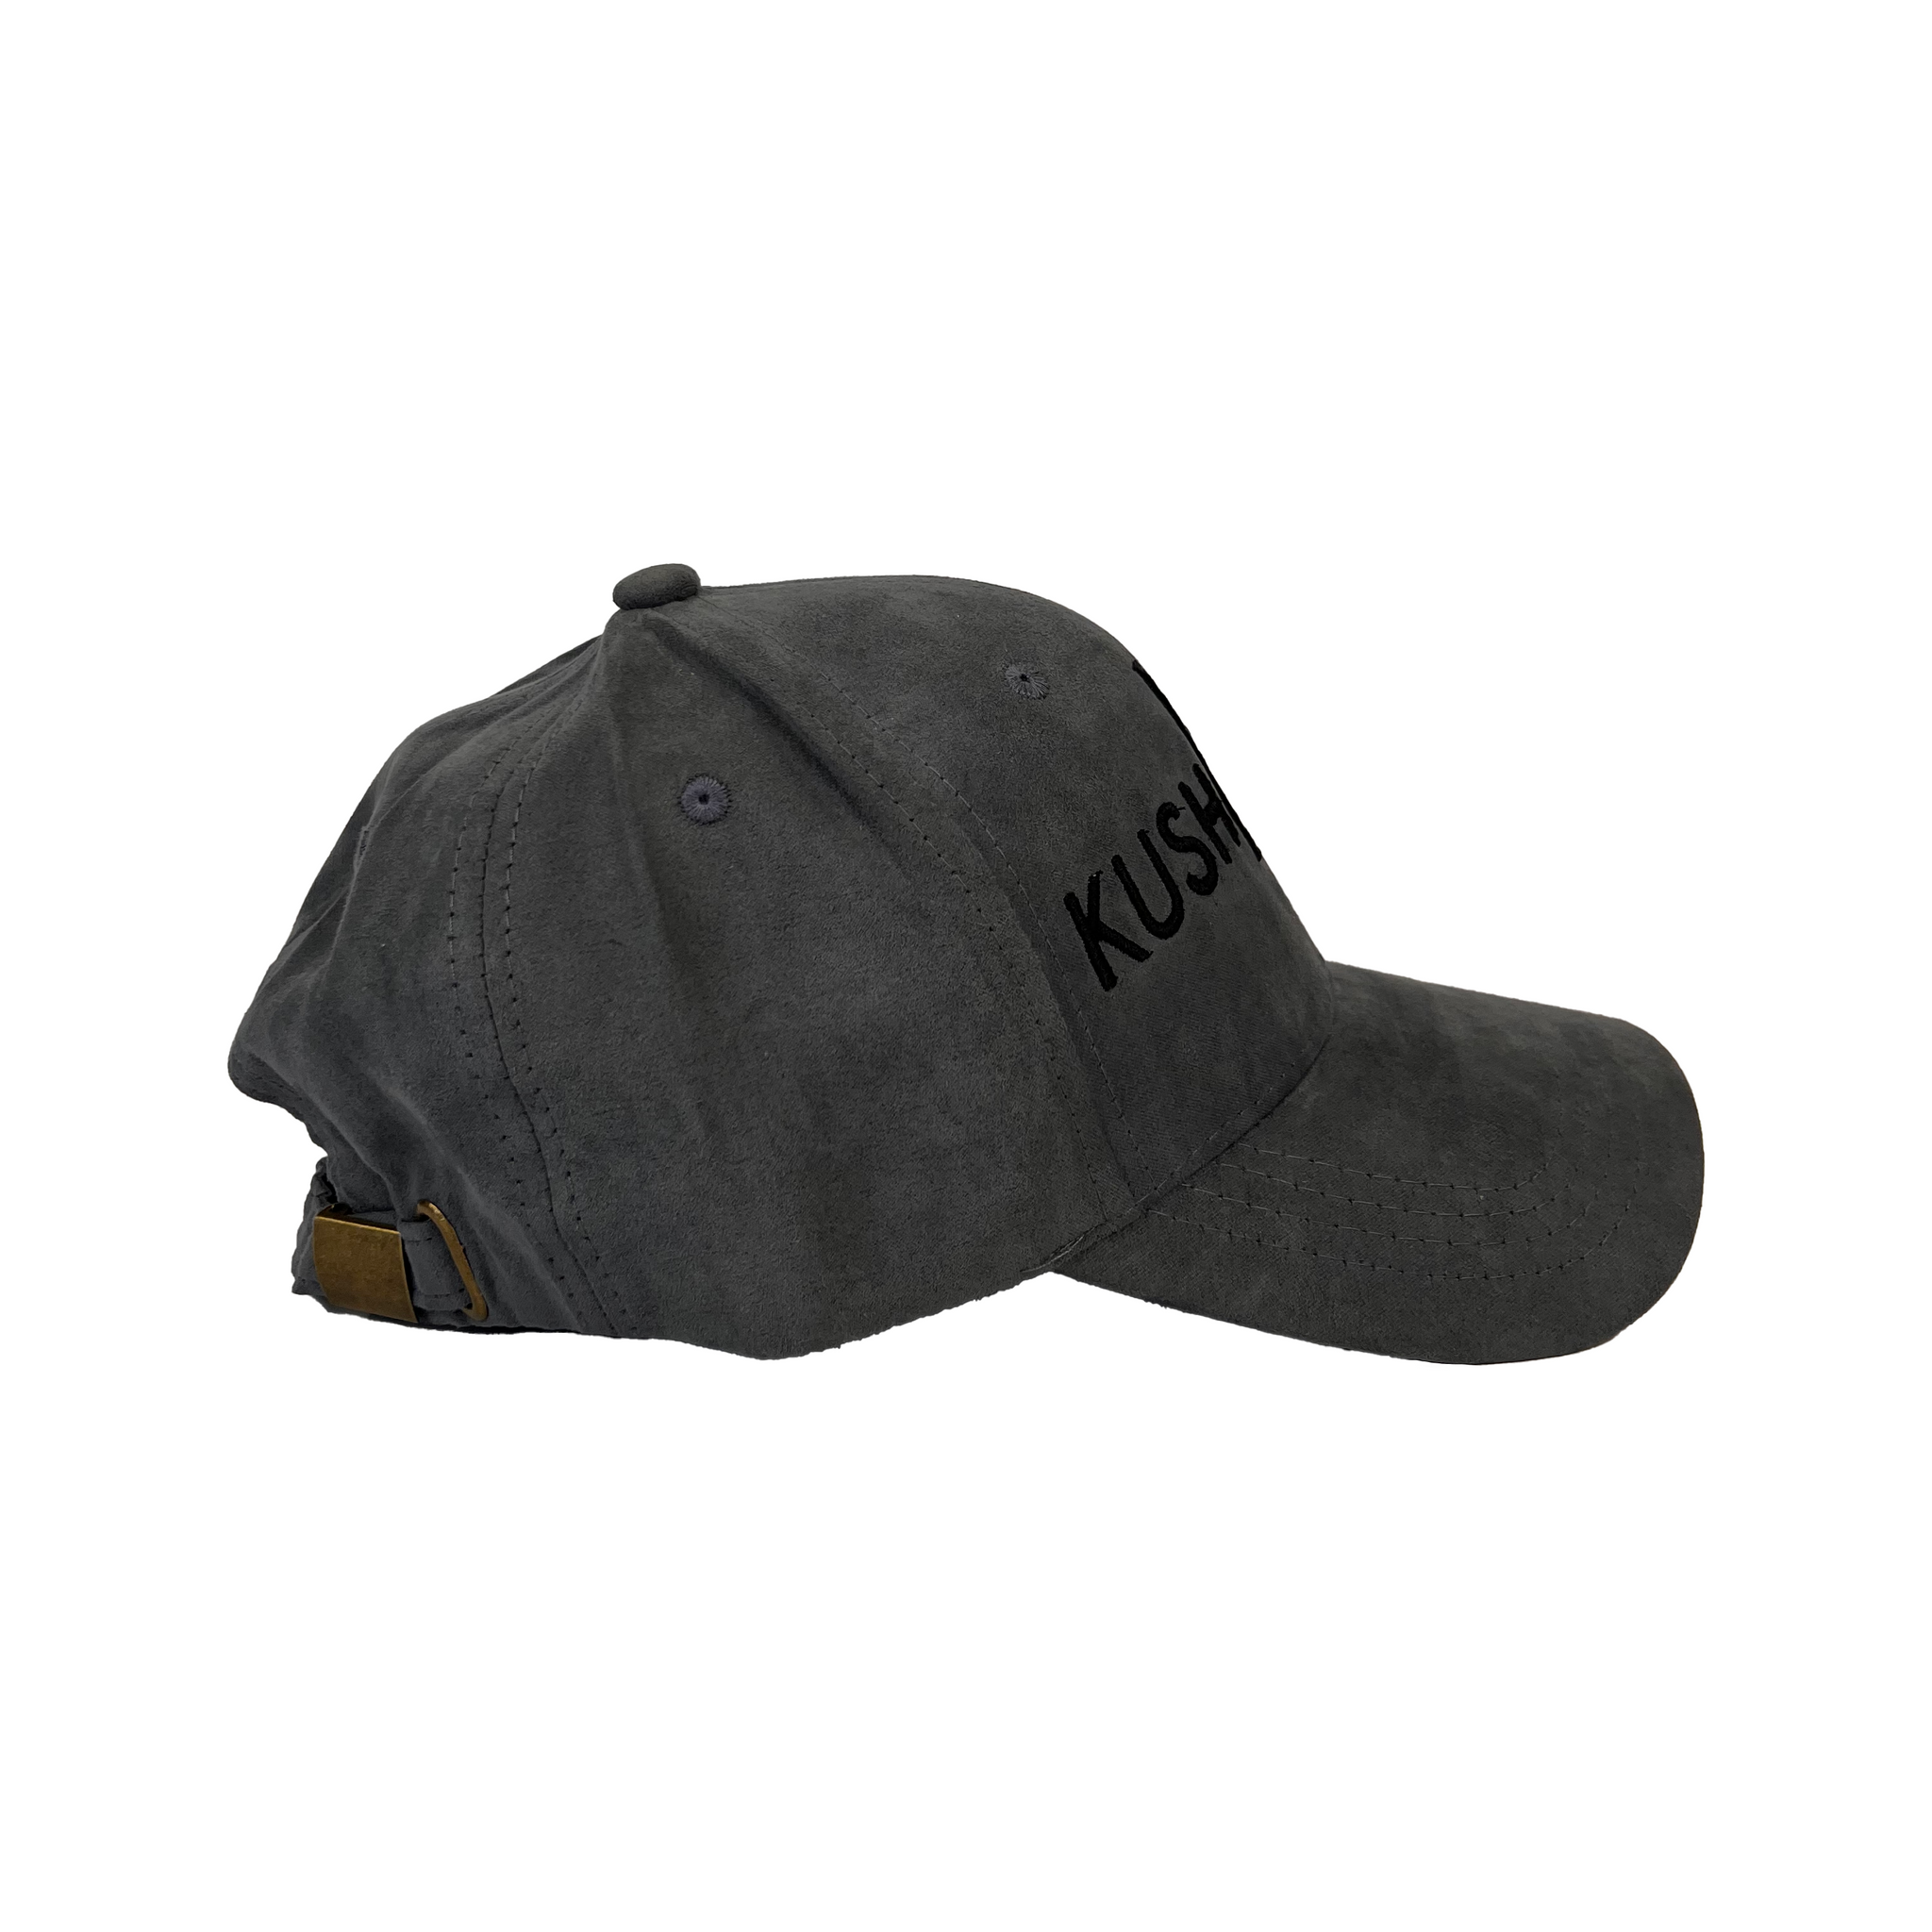 KL Logo Grey - Daddy's Hat